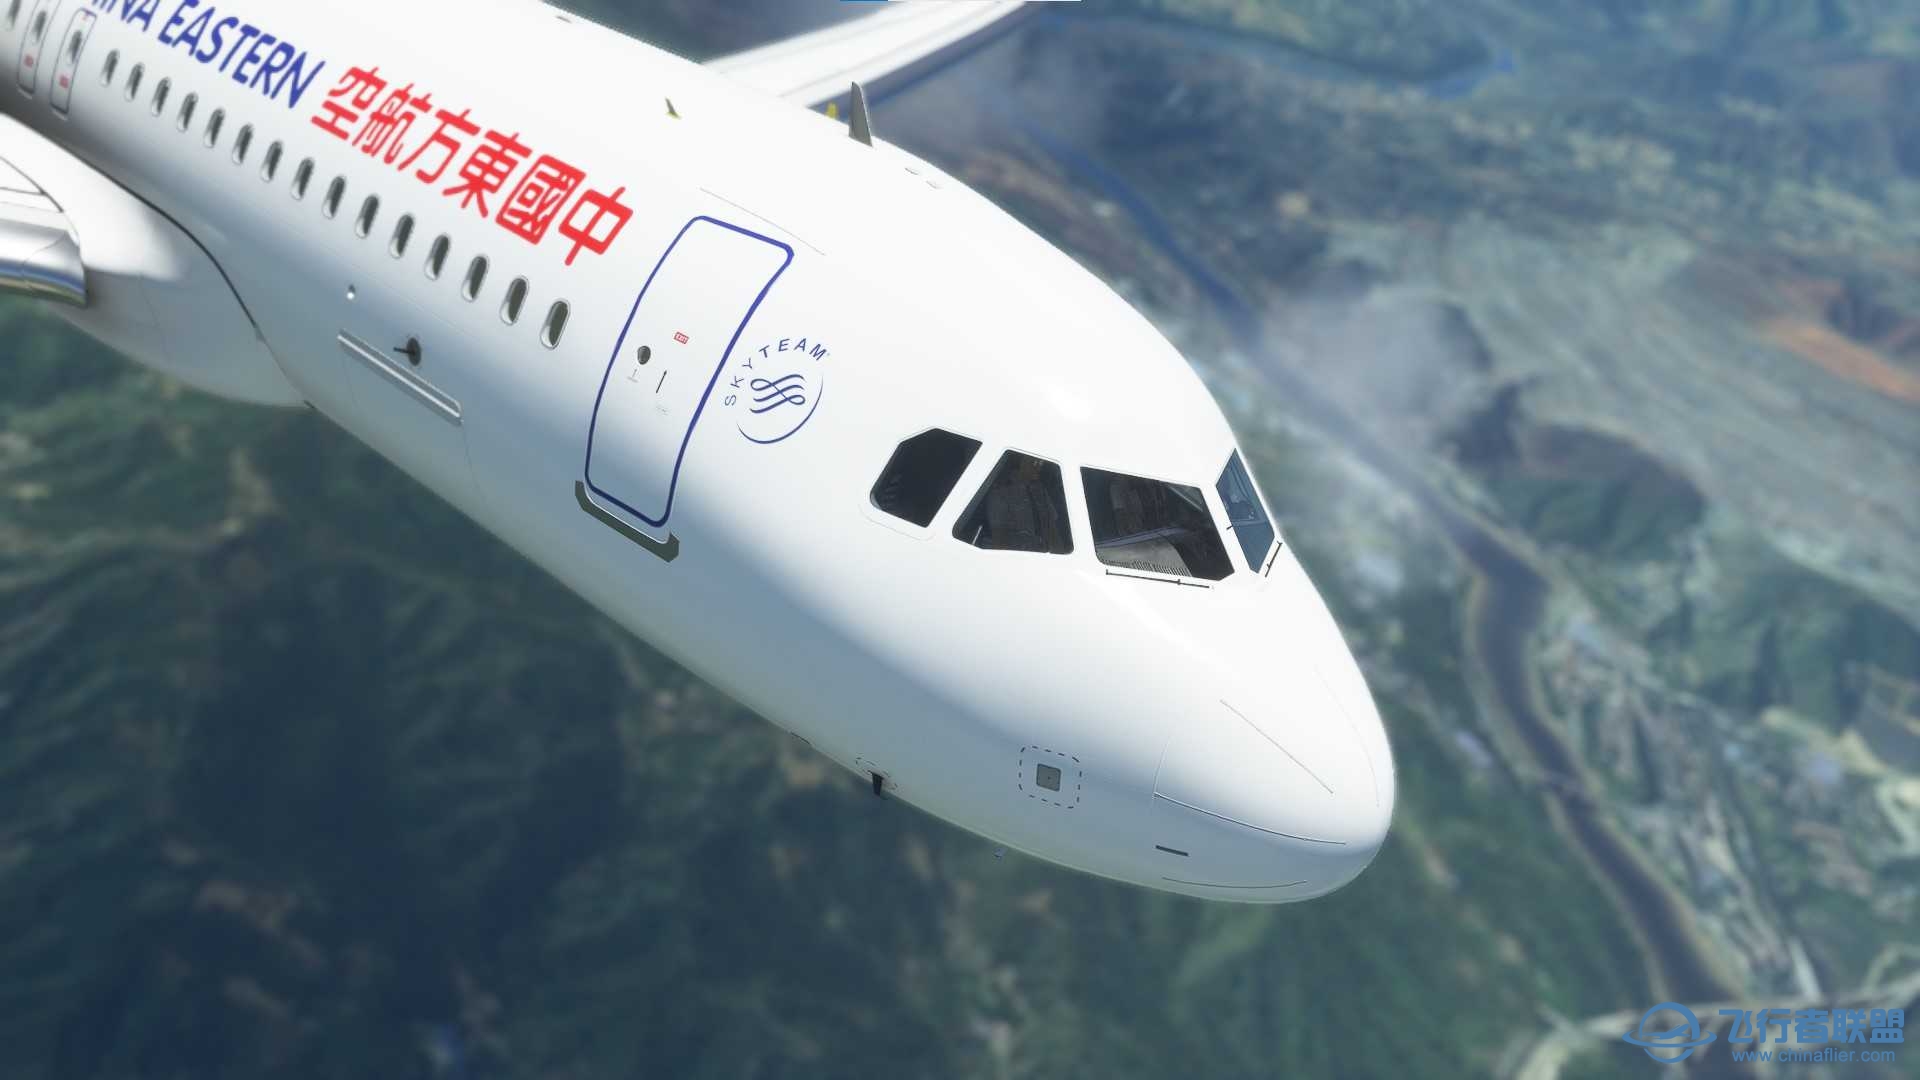 mfsa320neo中国东方航空8k高清修复